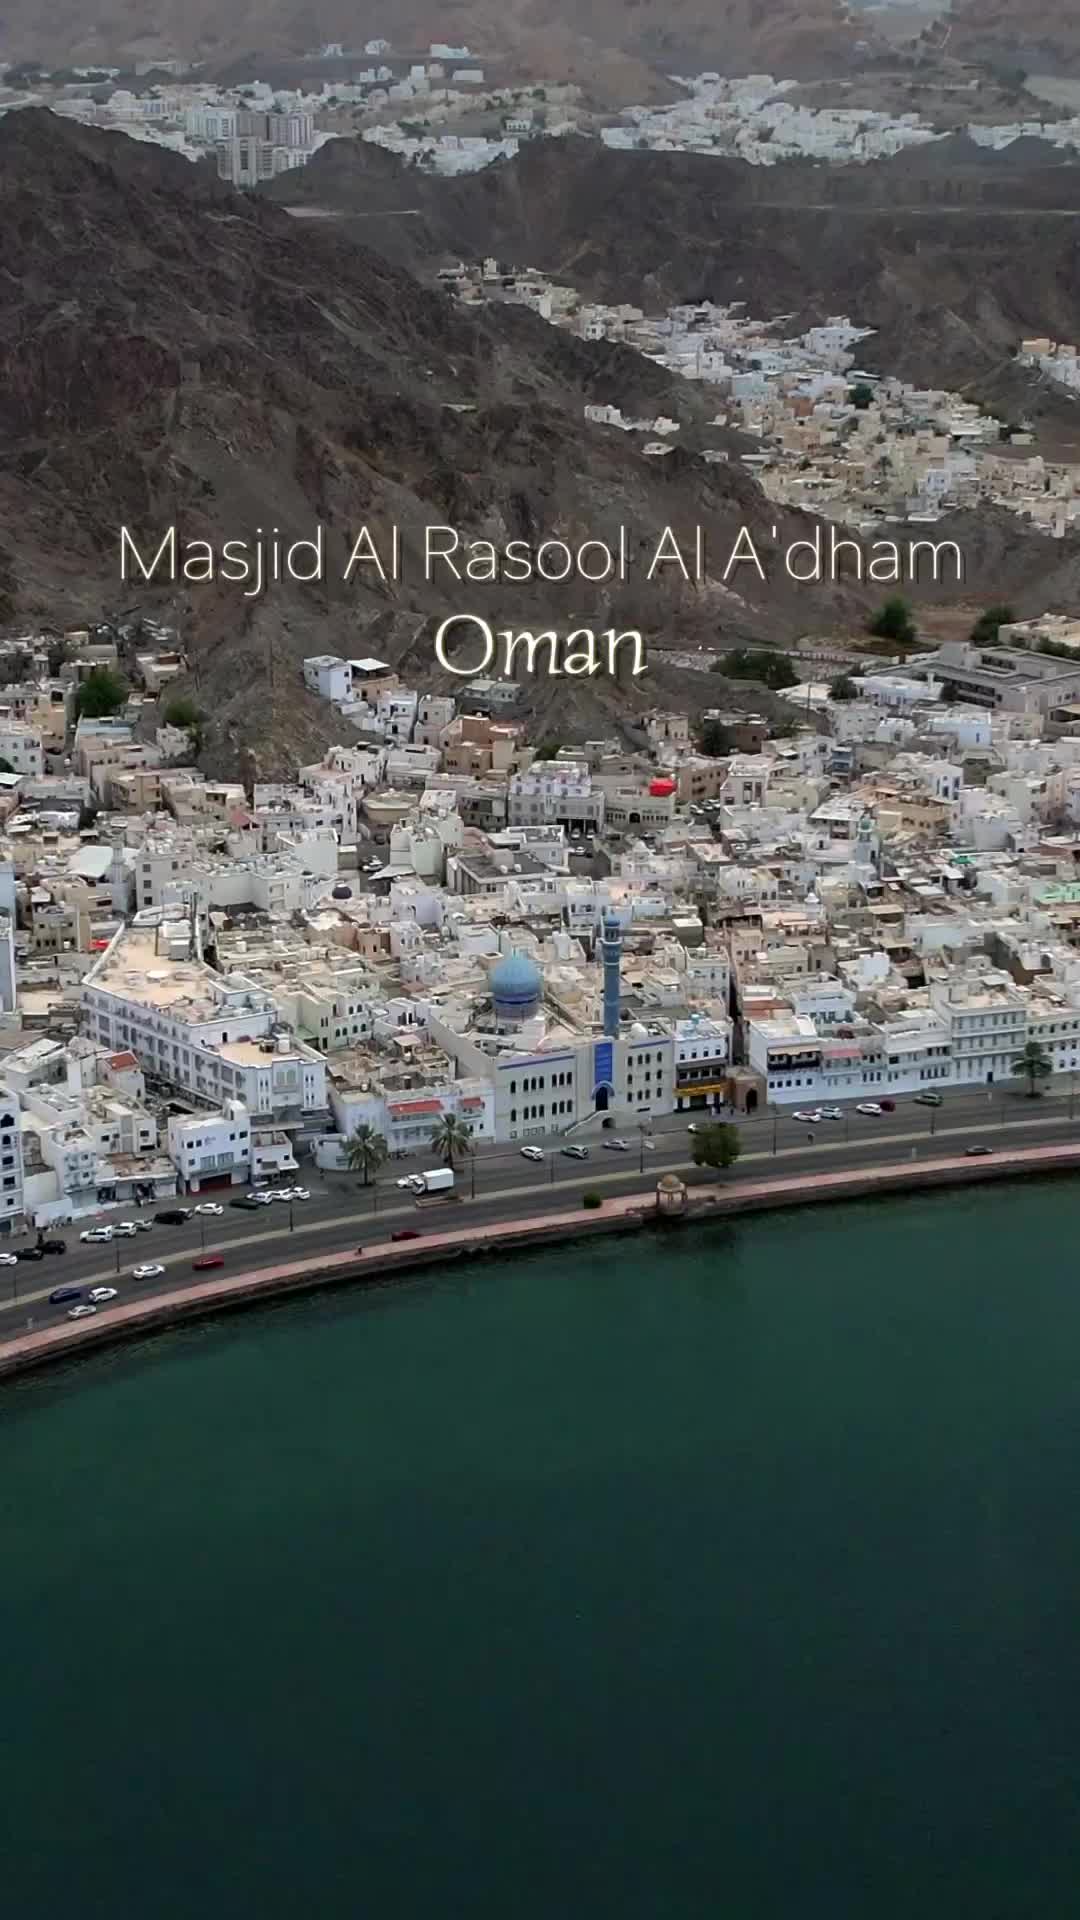 Discover the Timeless Beauty of Masjid Al Rasool Al A’dham